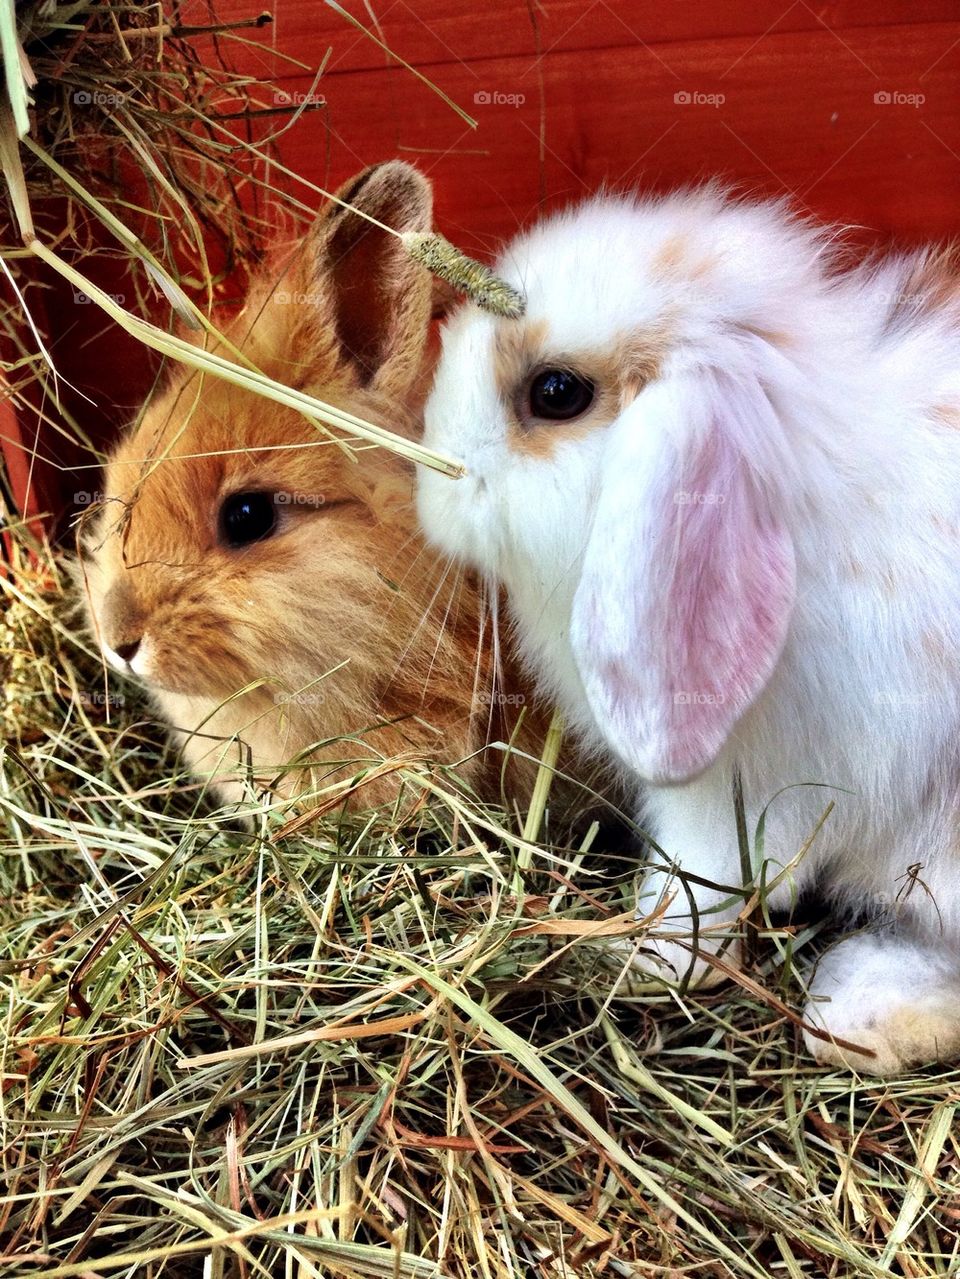 So cute bunnies!